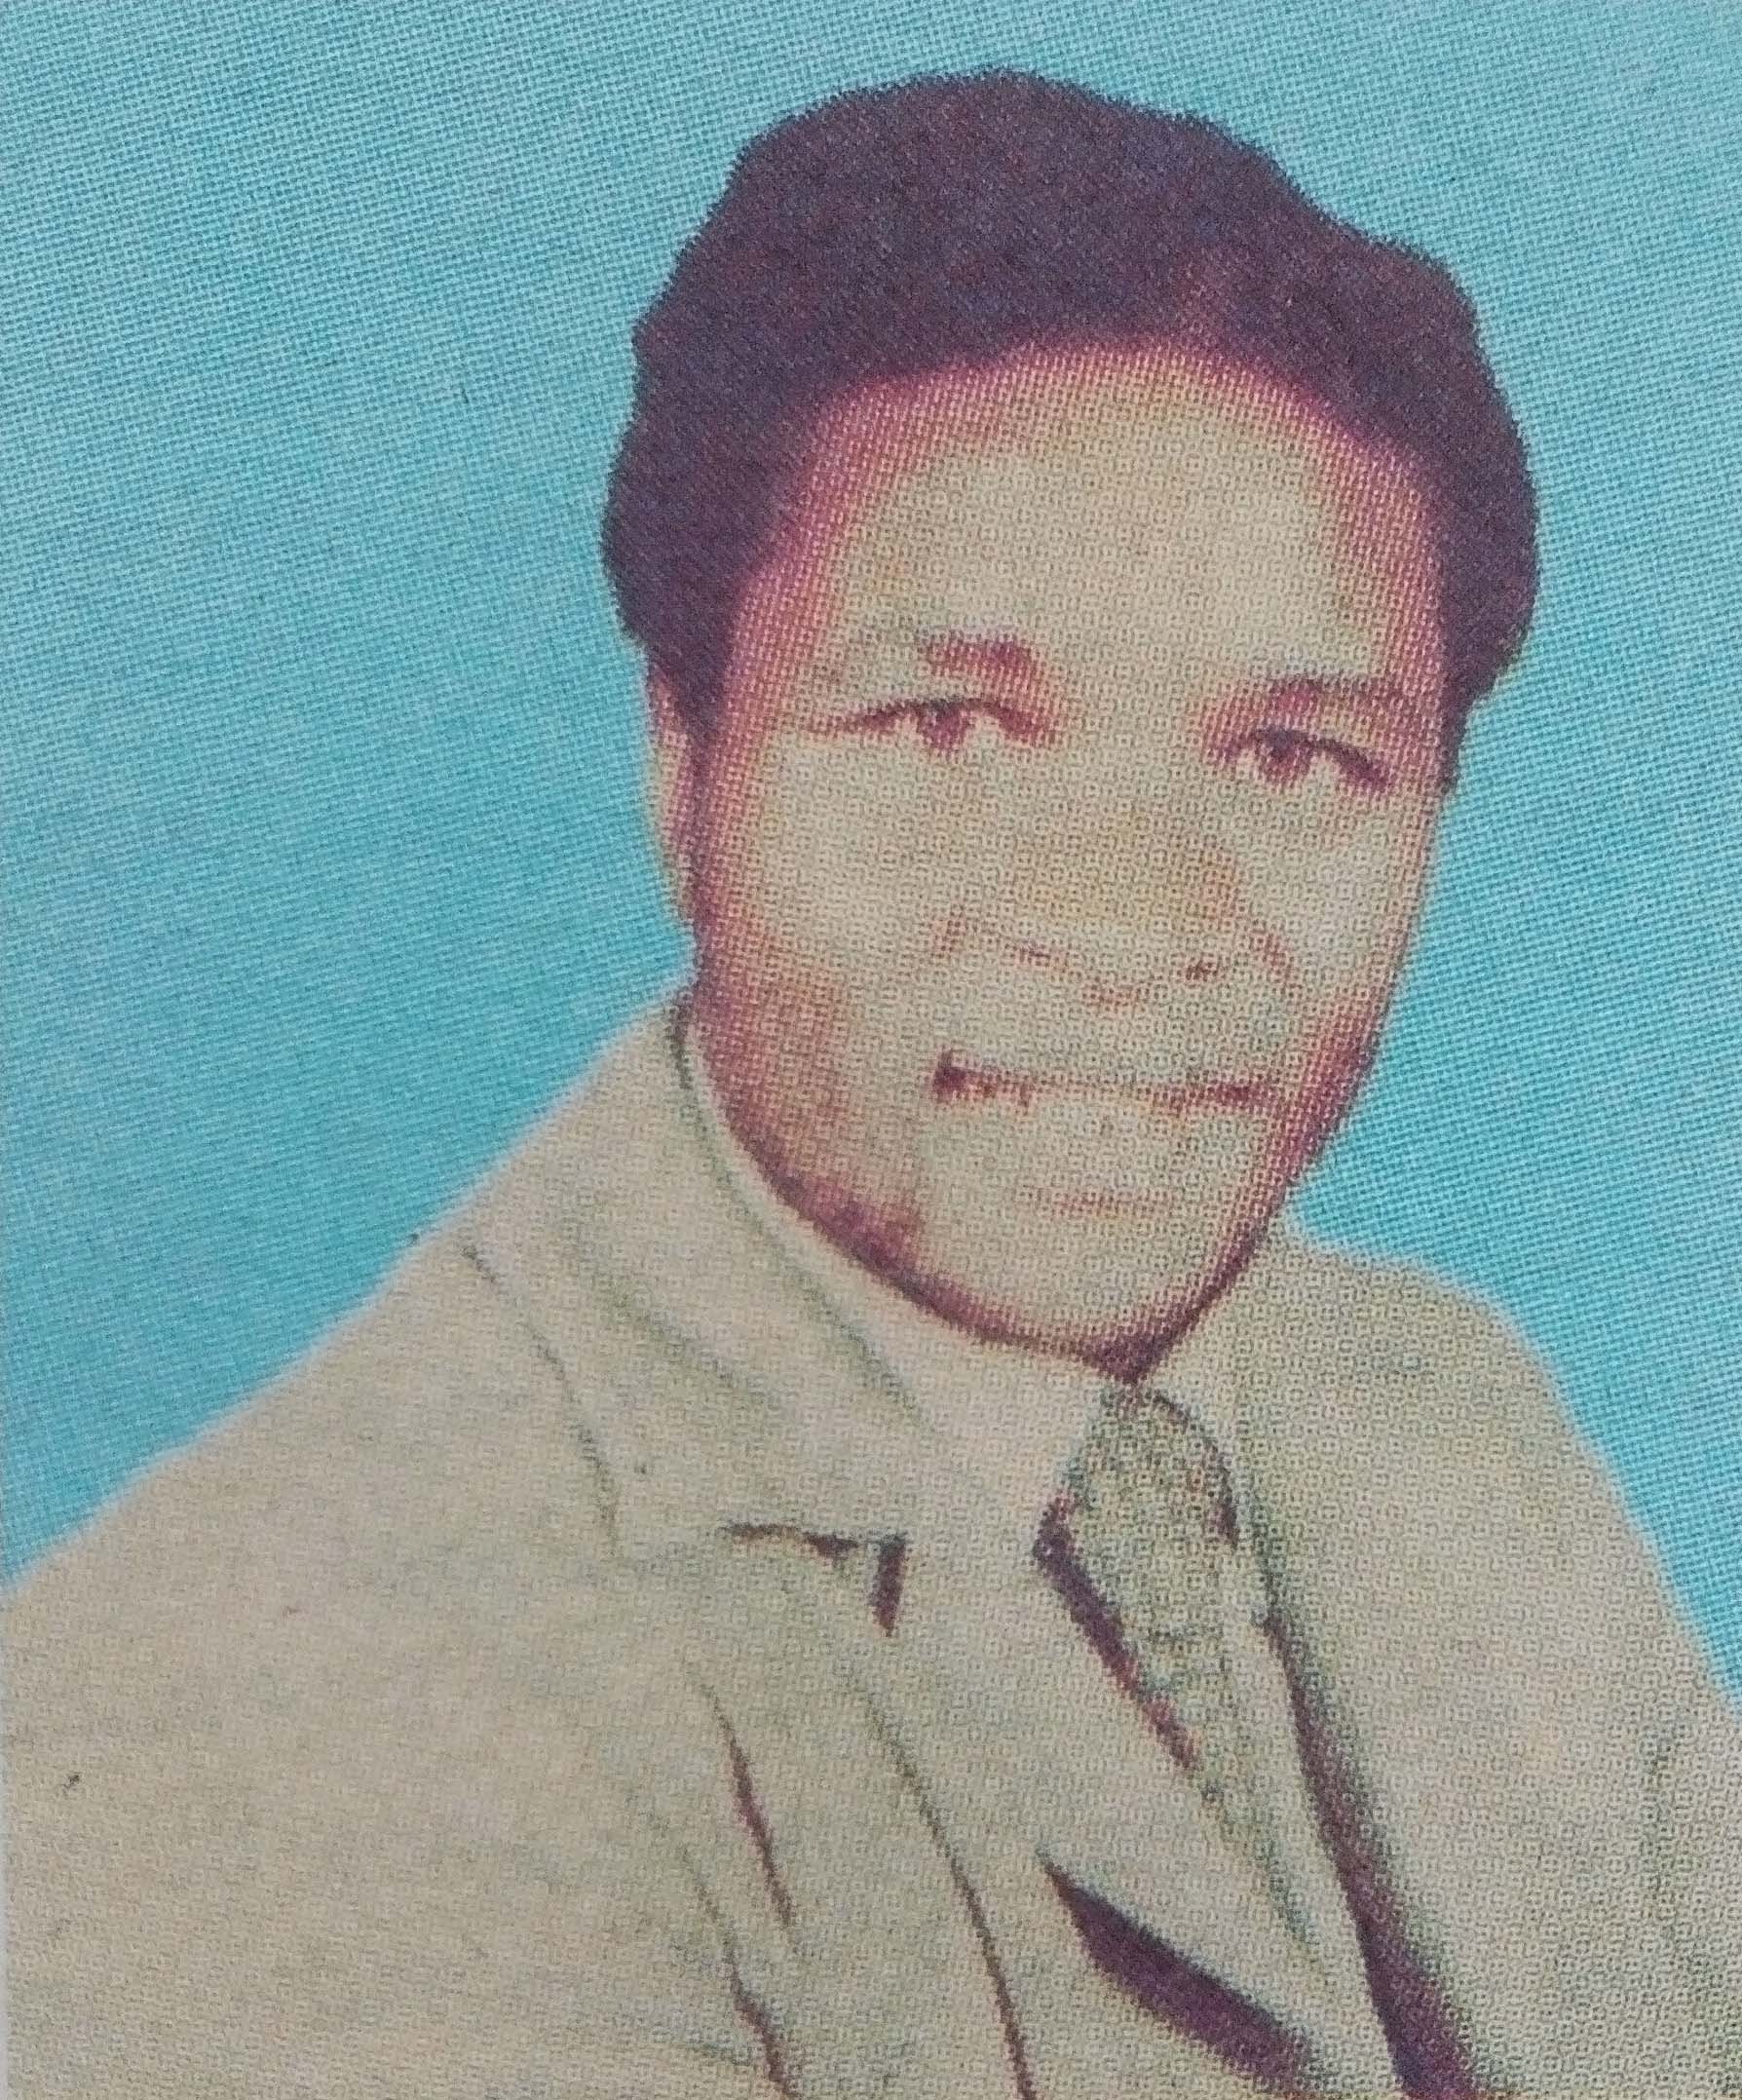 Obituary Image of Francis Kiboi Waweru